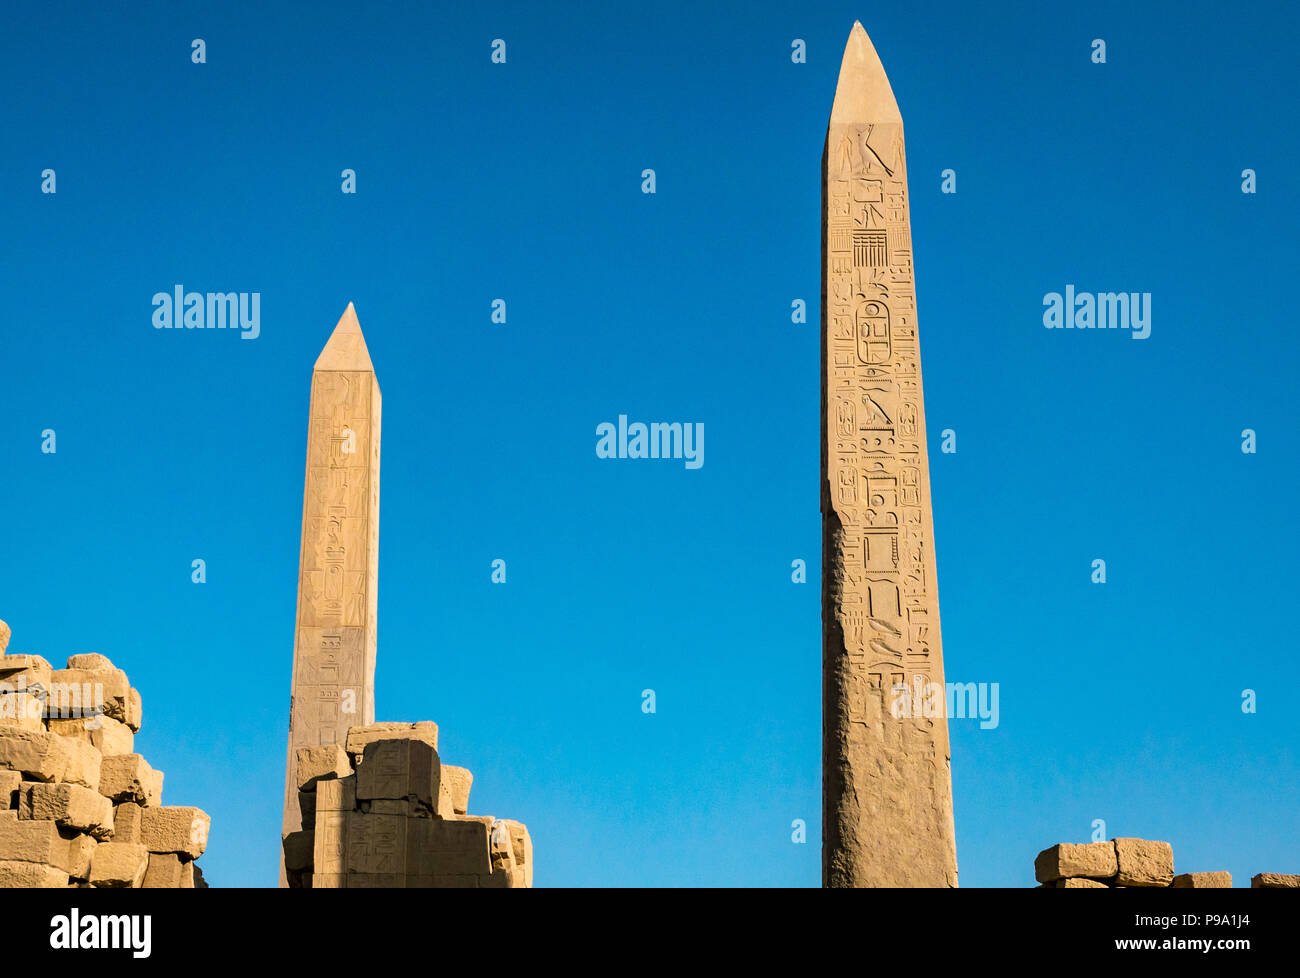 Ägyptische Hieroglyphen auf dem großen Obelisken, Karnak Tempel. Luxor, Ägypten, Afrika Stockfoto